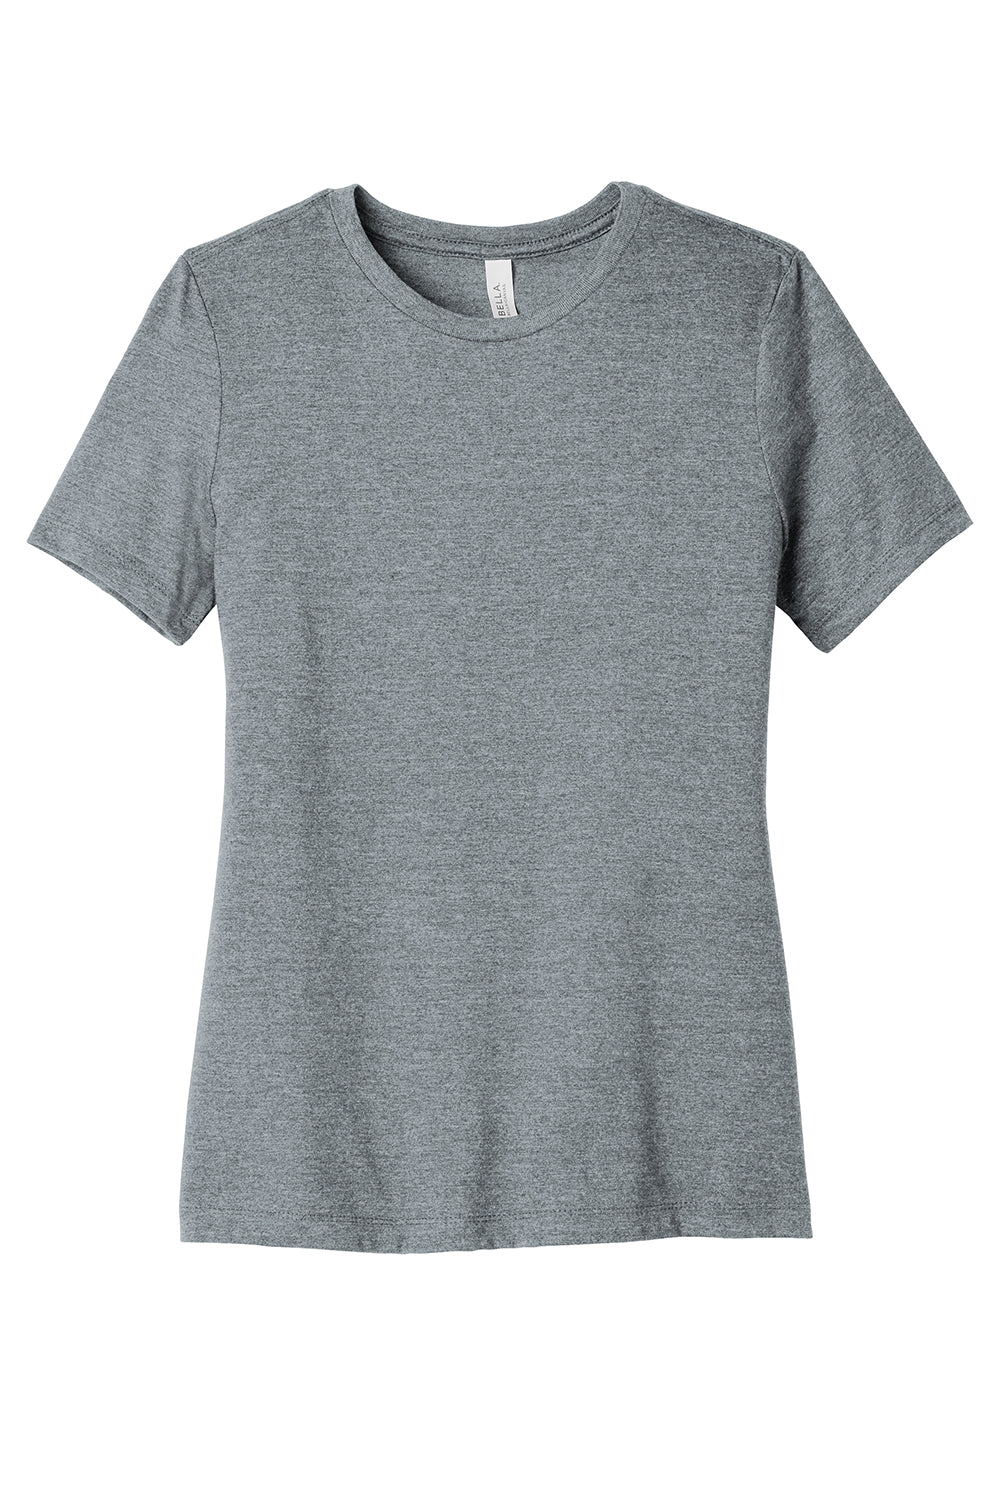 Bella + Canvas BC6413 Womens Short Sleeve Crewneck T-Shirt Athletic Grey Flat Front